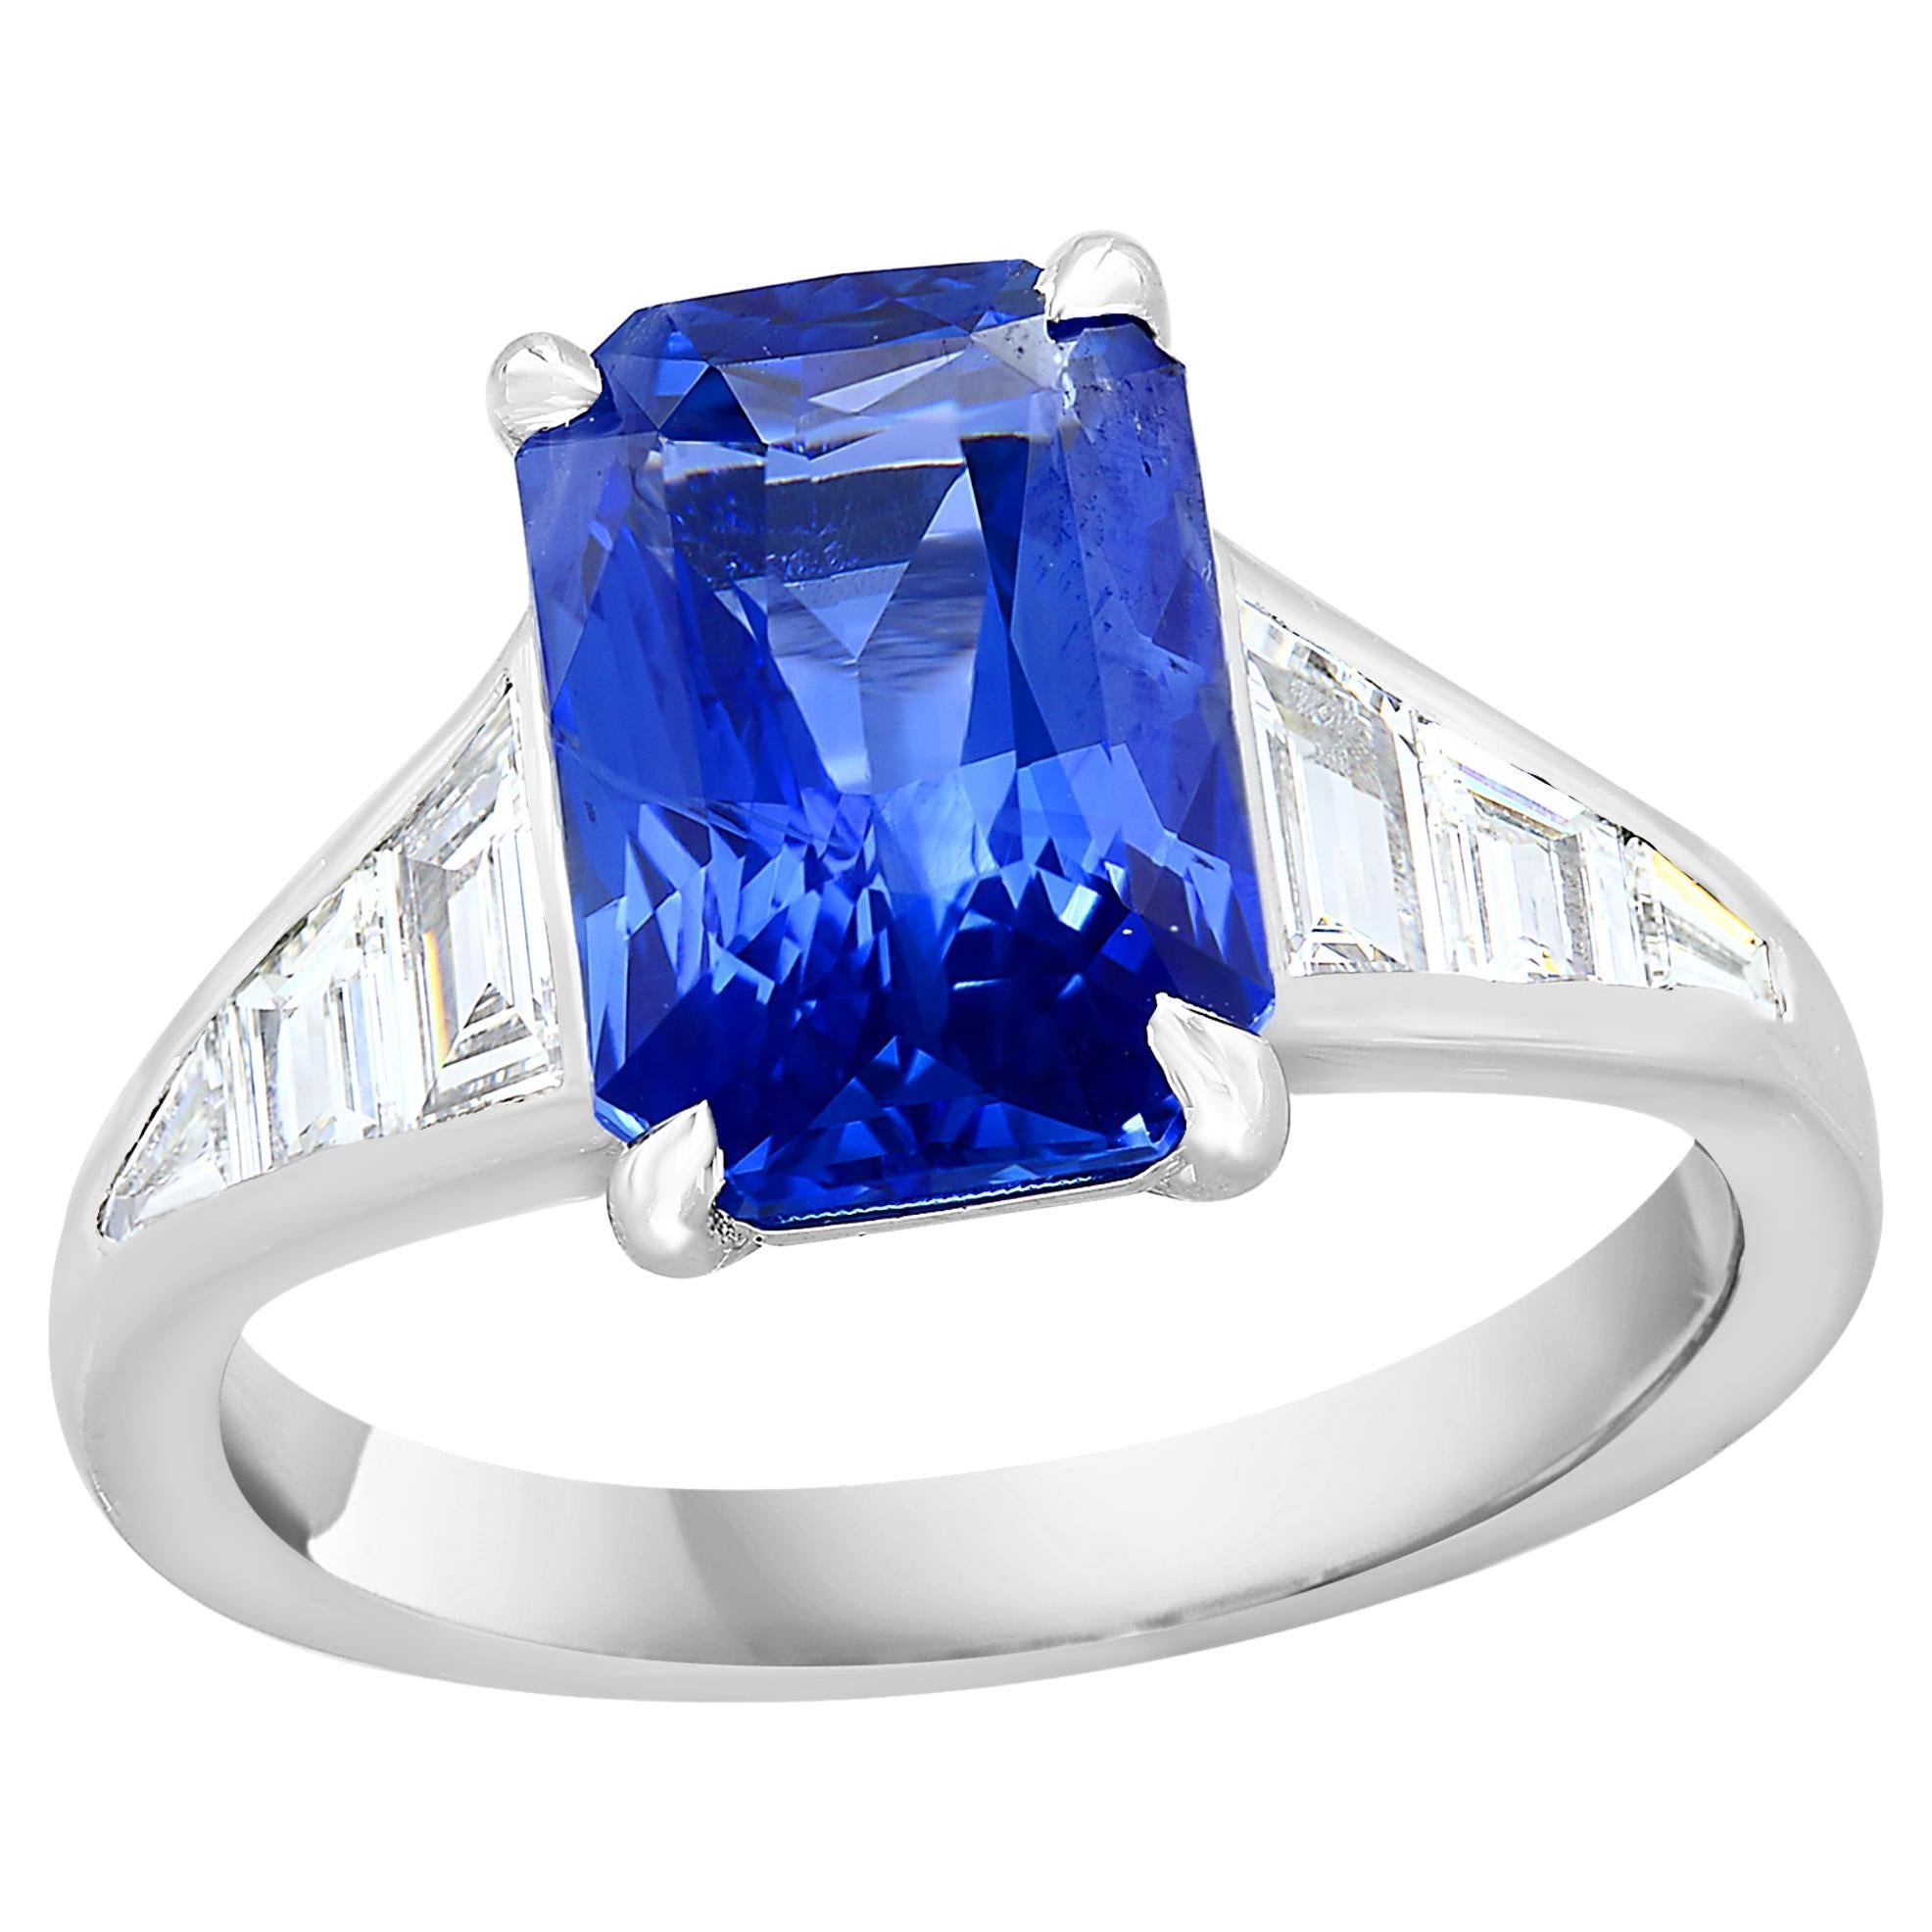 4.13 Carat Emerald Cut Blue Sapphire and Diamond Engagement Ring in Platinum